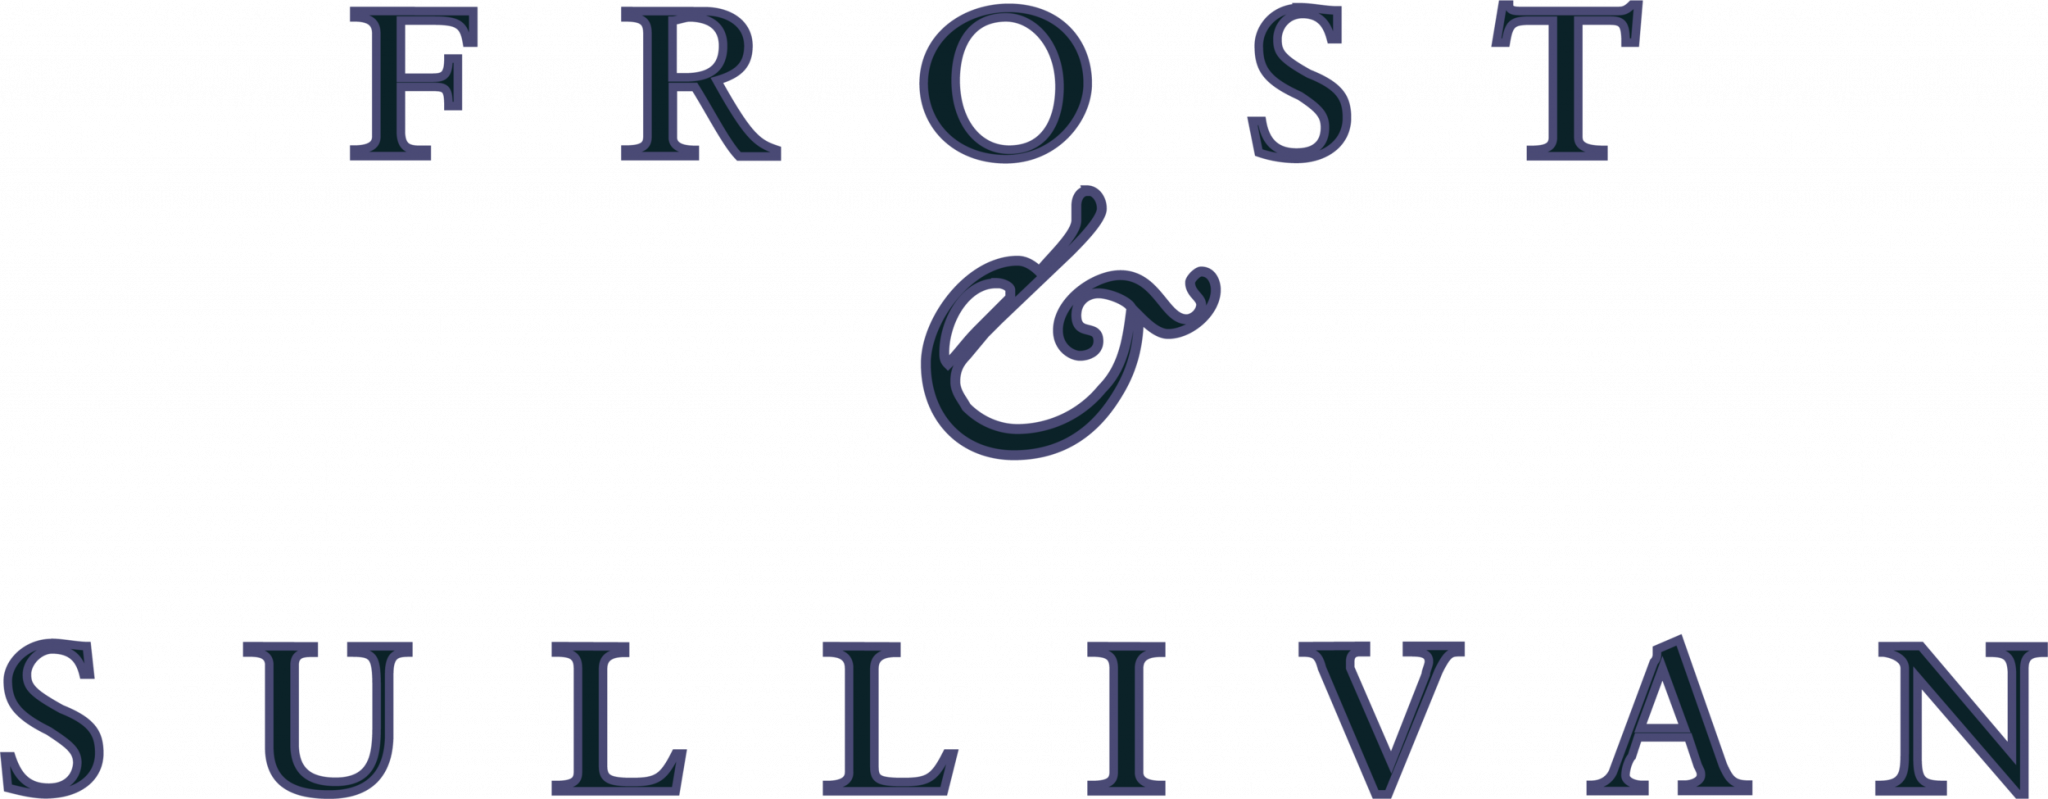 Frost-Sullivan-logo2-2048x799